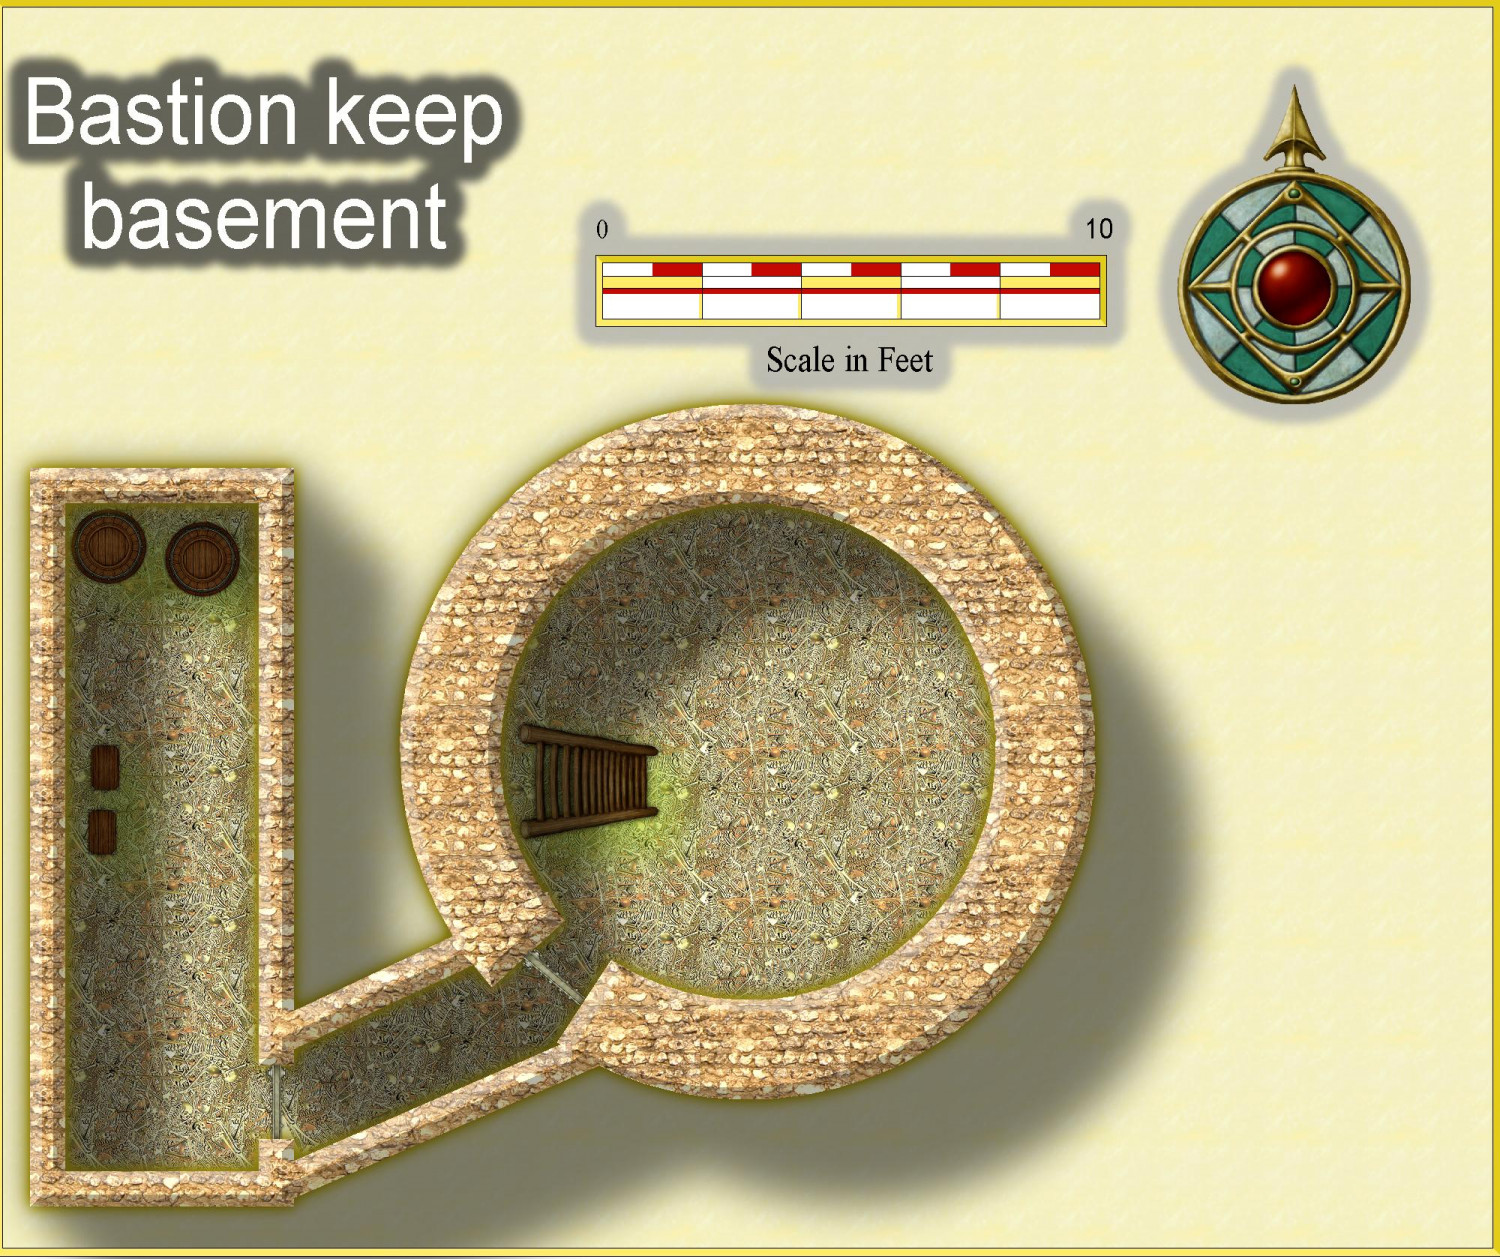 bastion_keep_basement_0003.JPG